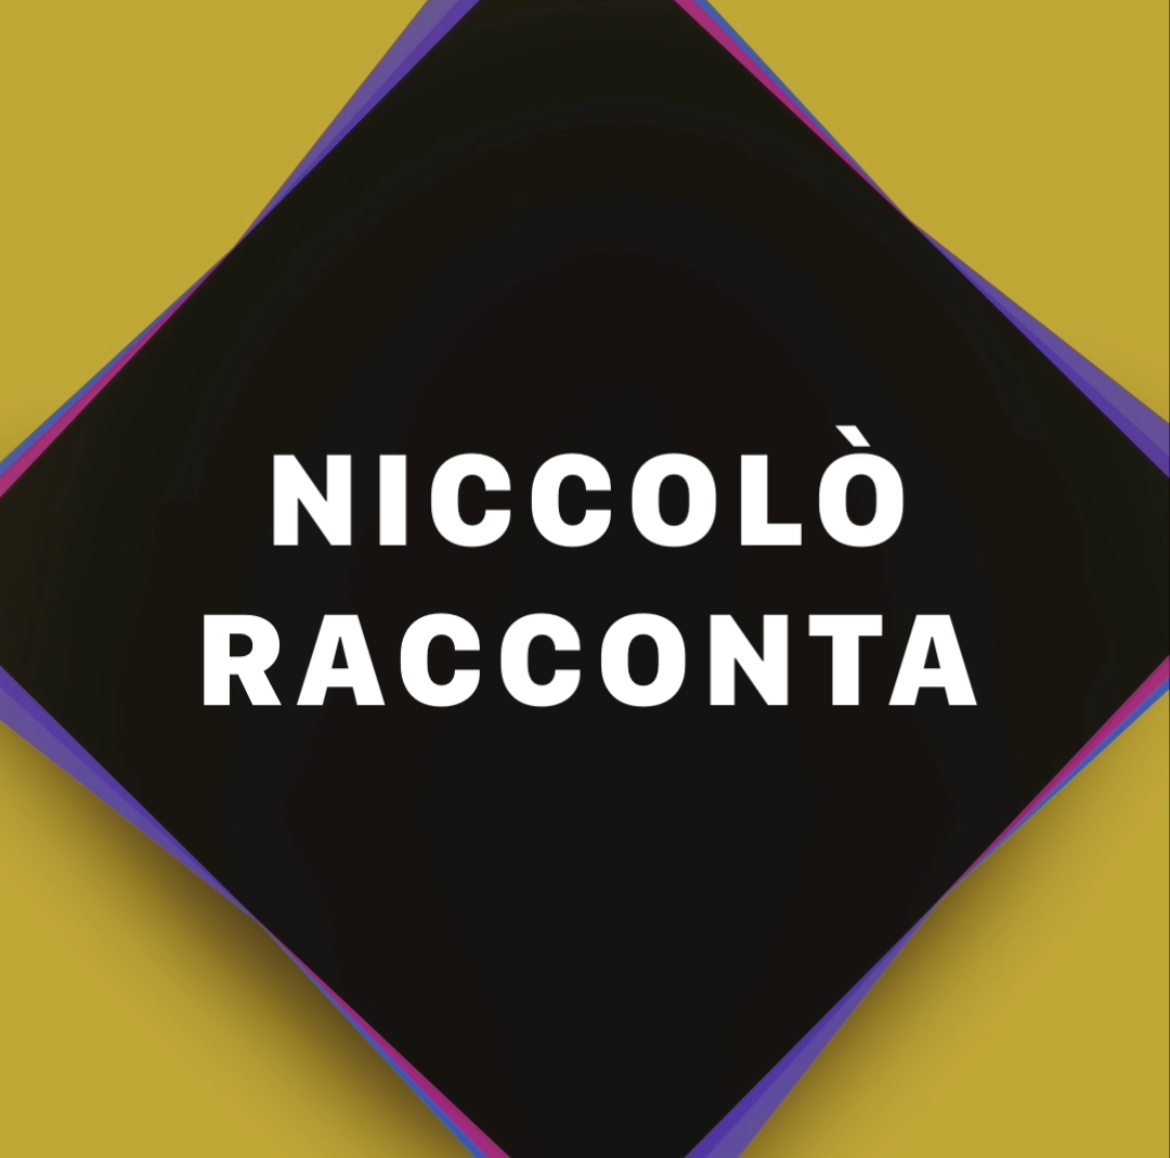 Niccolò Racconta